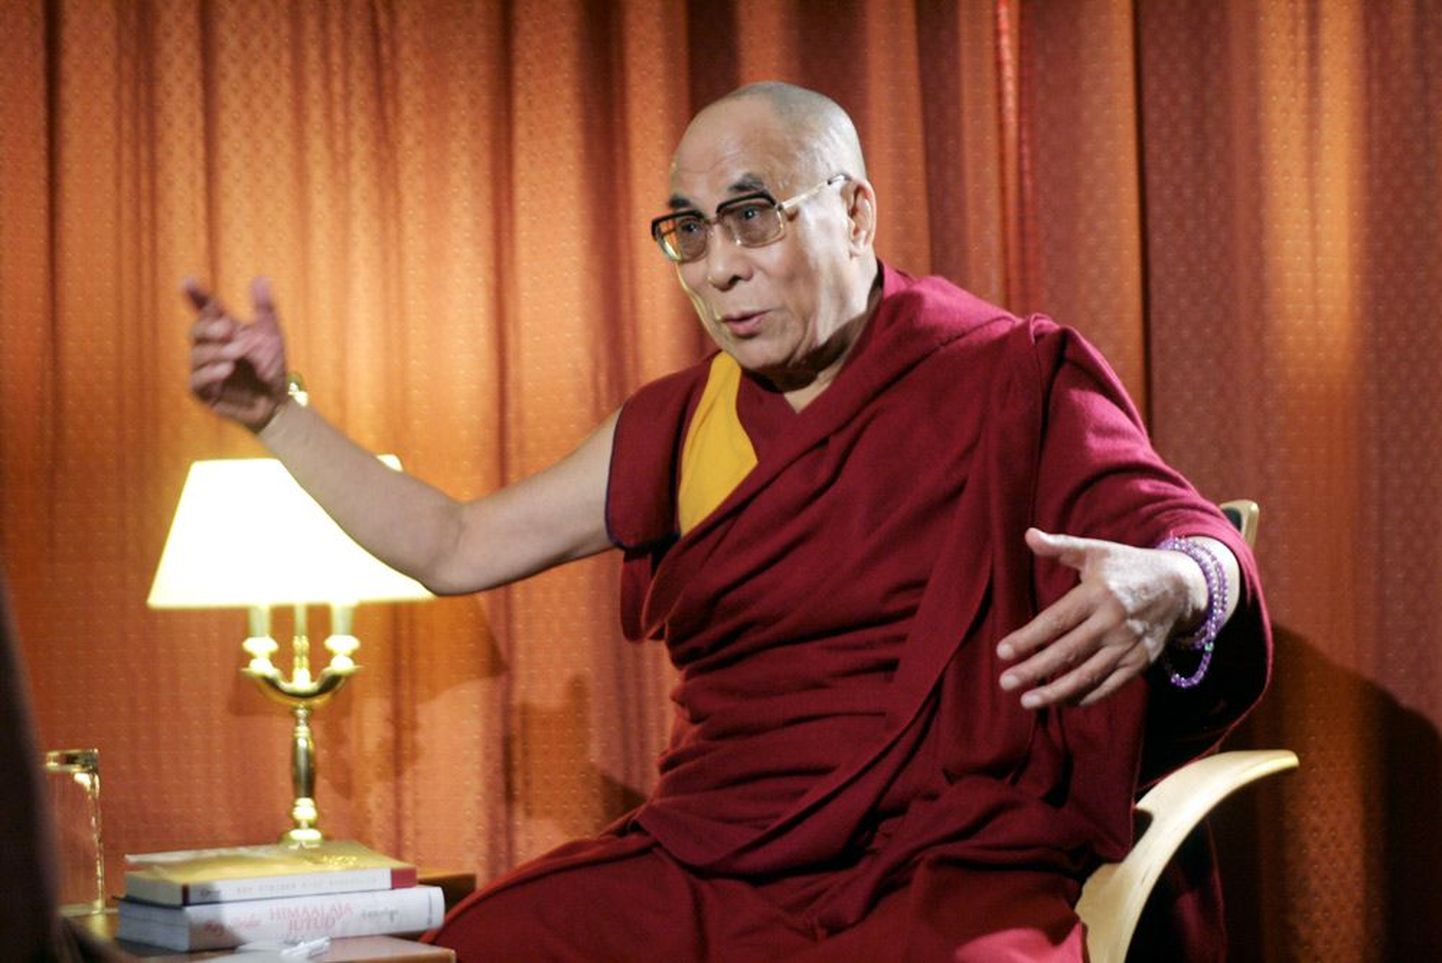 Далай-лама XIV Тэнцзин Гьямцхо дает интервью газете Postimees во время  визита в Таллинн.